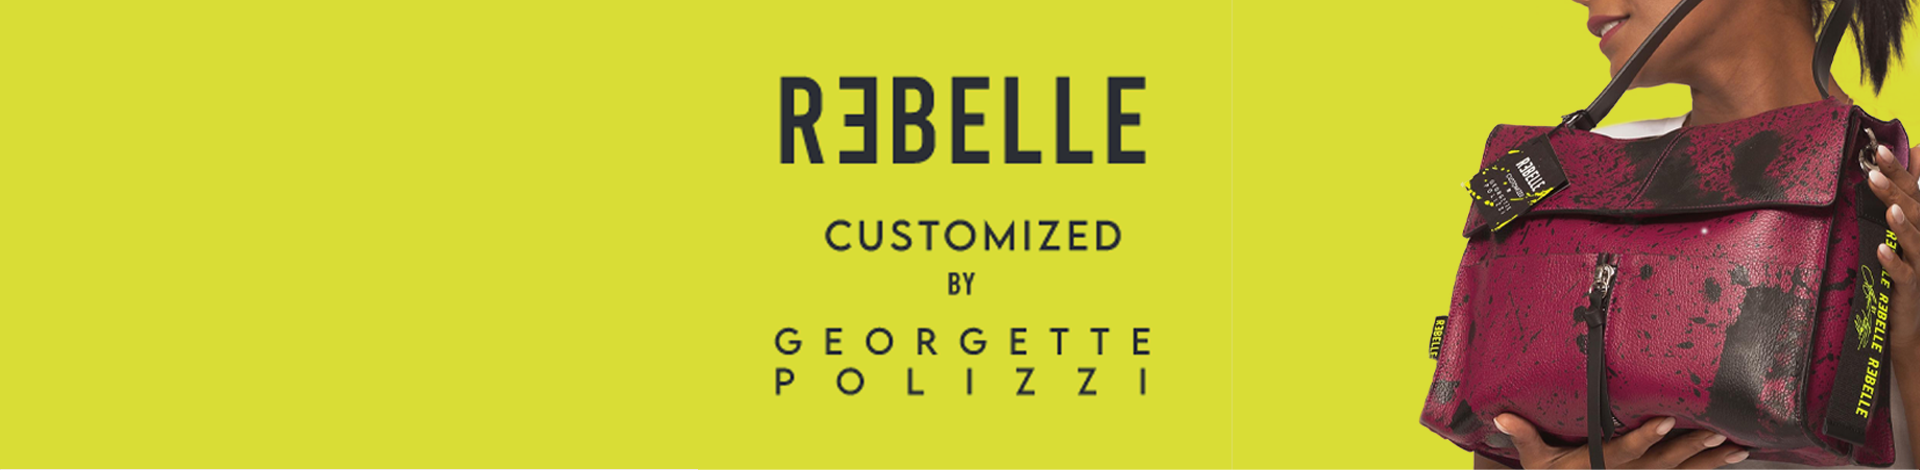 Rebelle by Georgette Polizzi